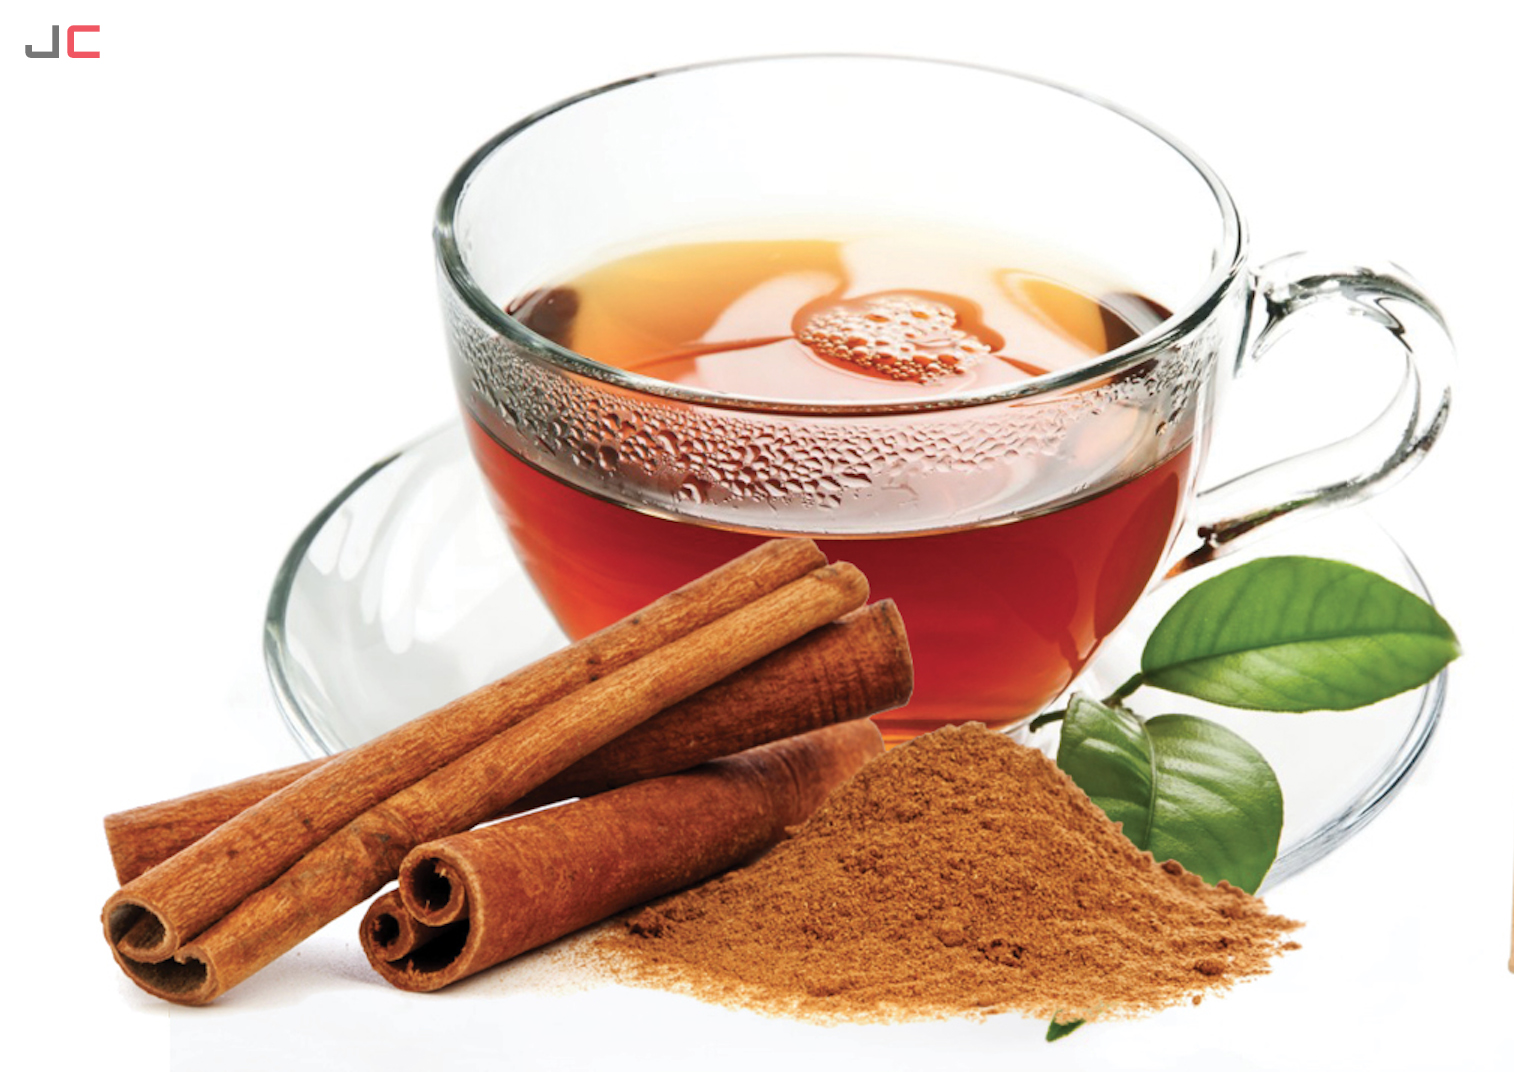 How to make cinnamon tea